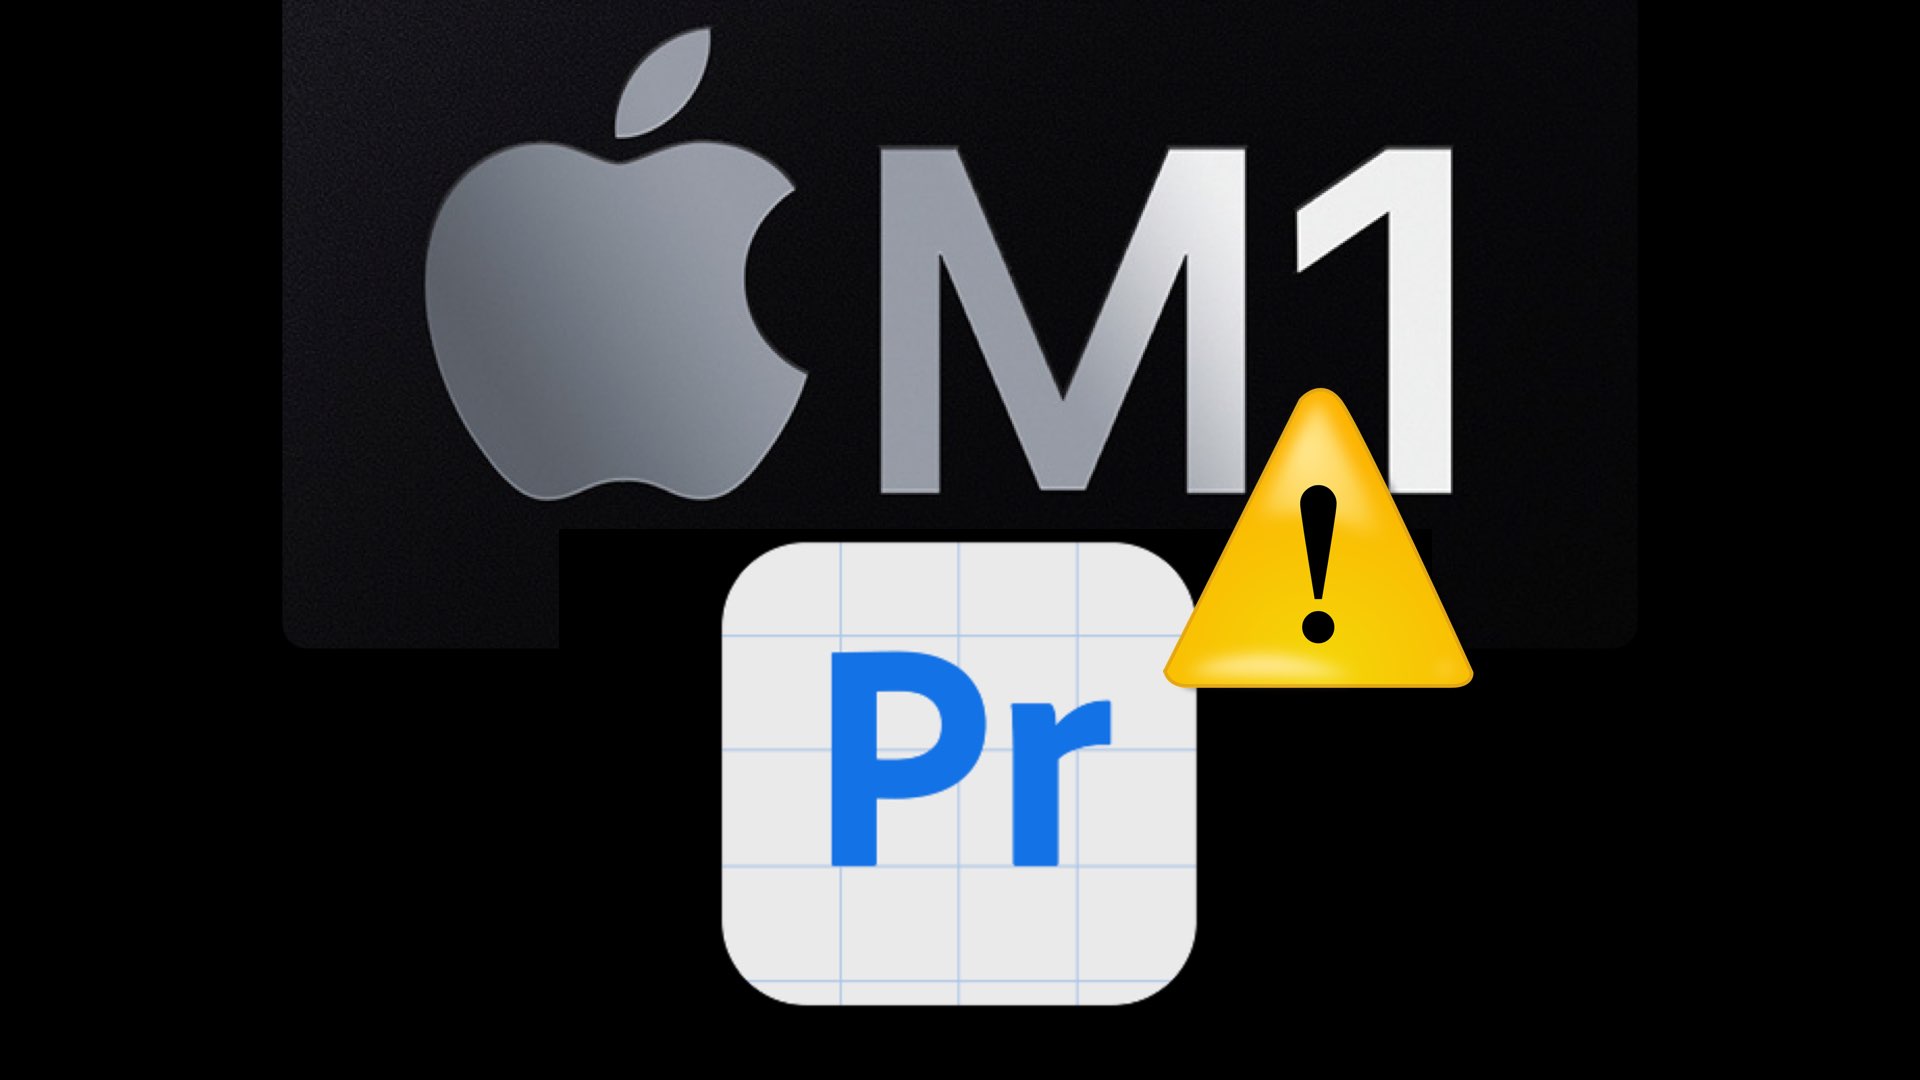 Premiere Pro Public Beta is now on Apple Silicon M1